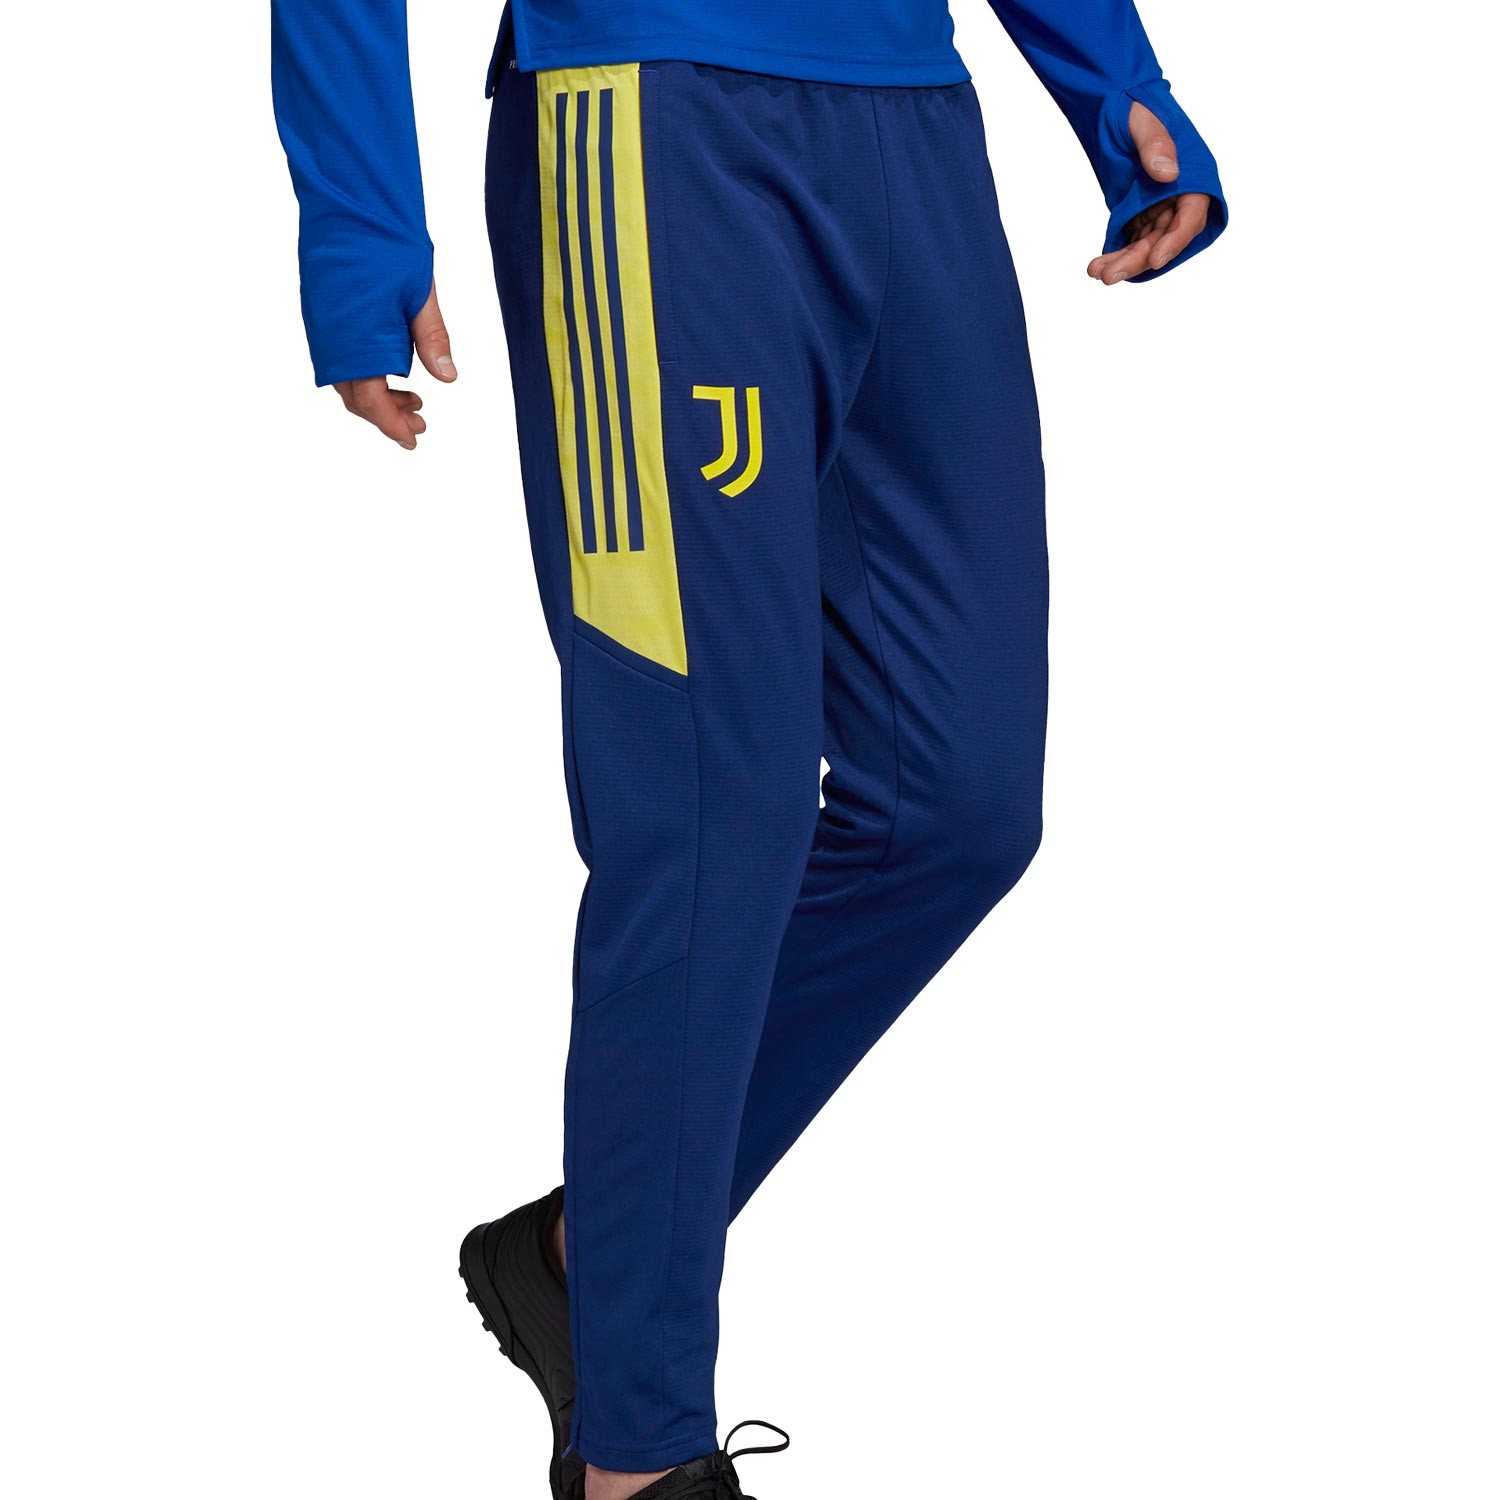 Pantalón adidas Juventus UCL azul marino | futbolmania